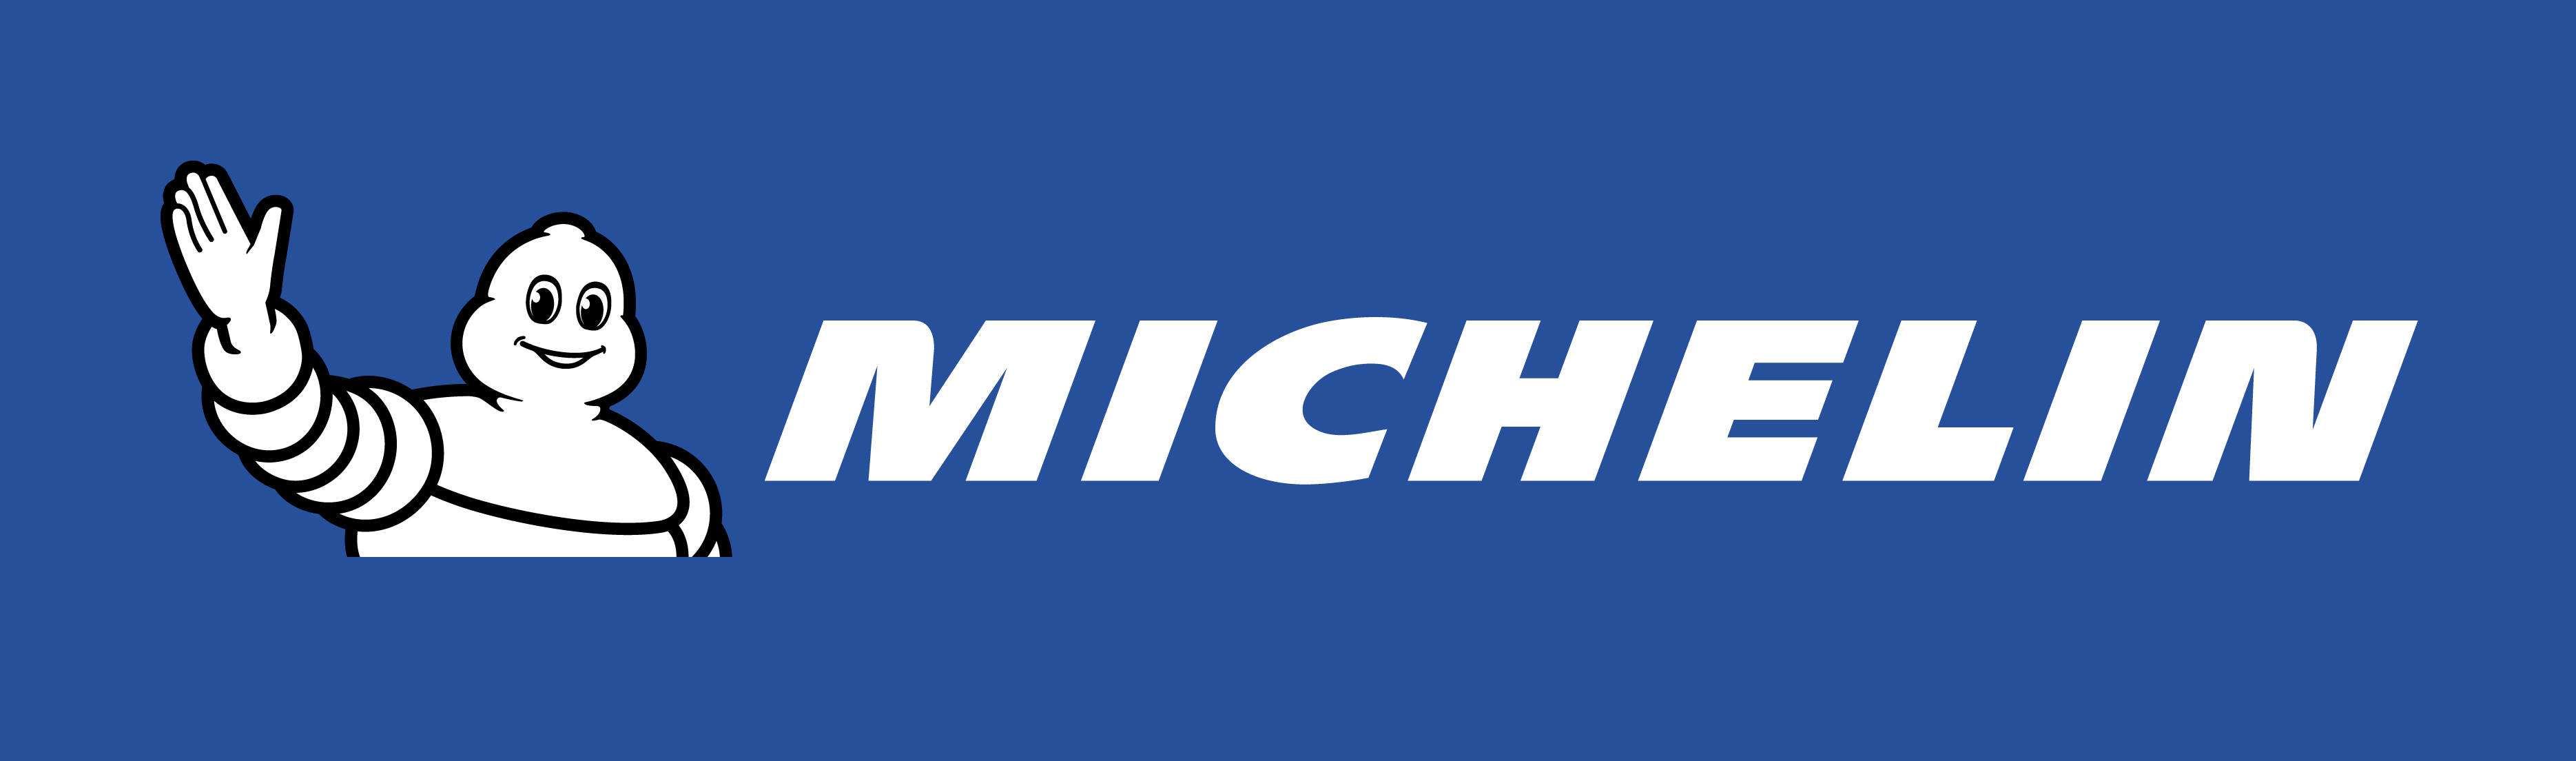 Michelinblått Logotyp. Wallpaper